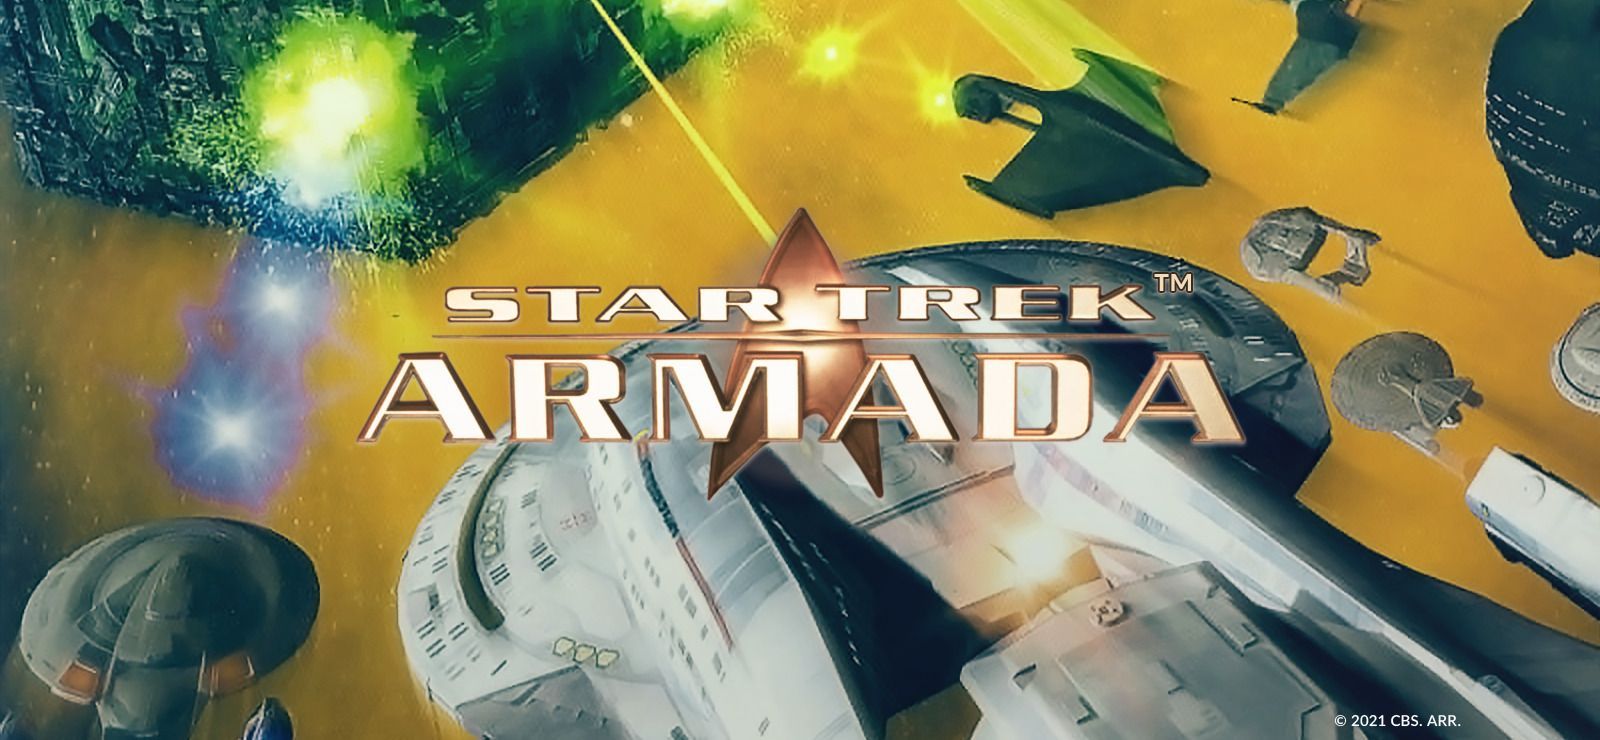 Star Trek Armada - Could a Third Game Happen?